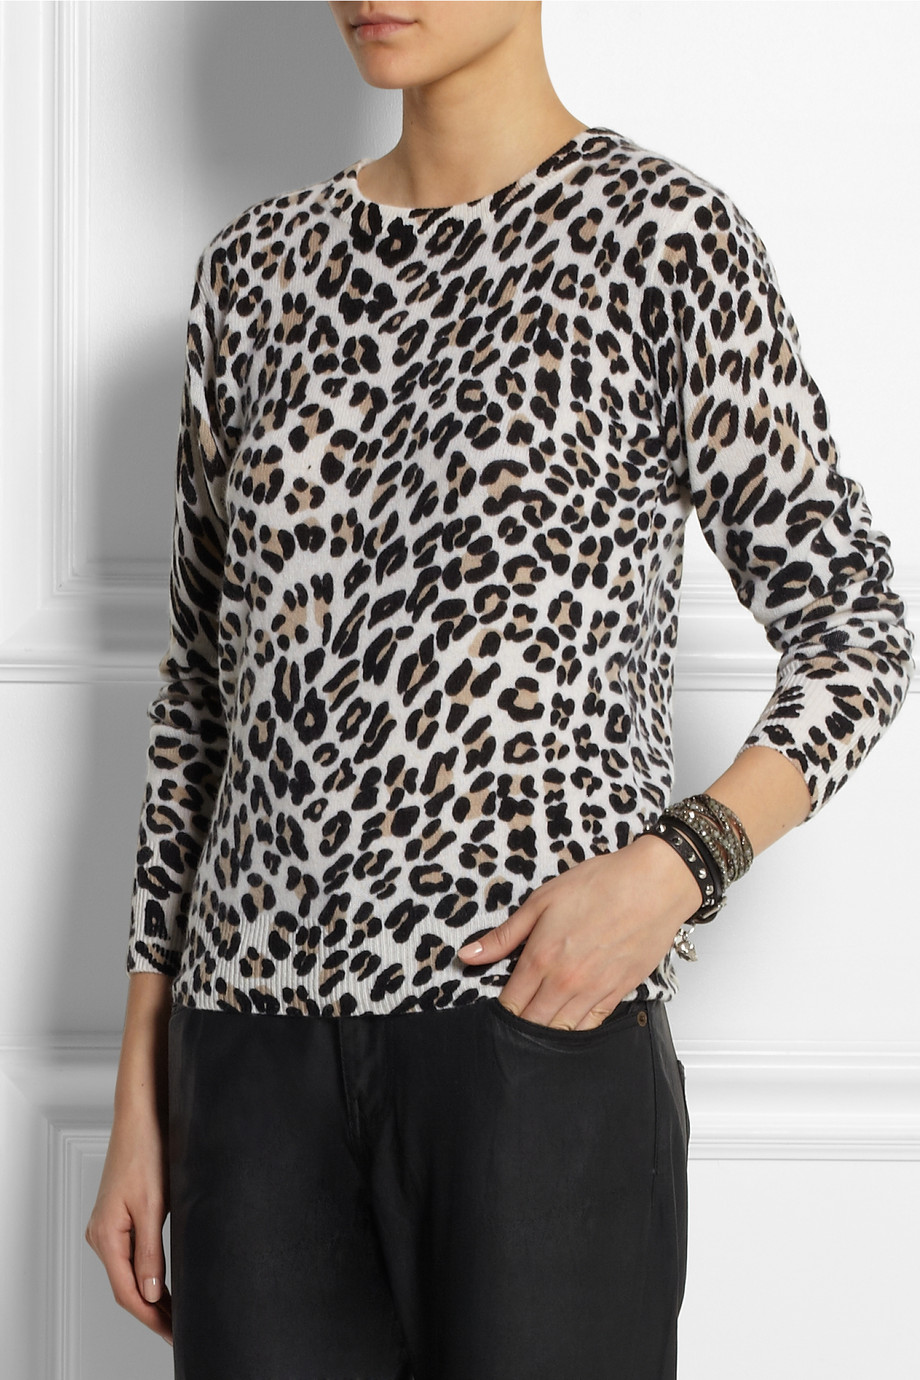 Equipment Shane Leopard Print Cashmere Sweater in Black | Lyst